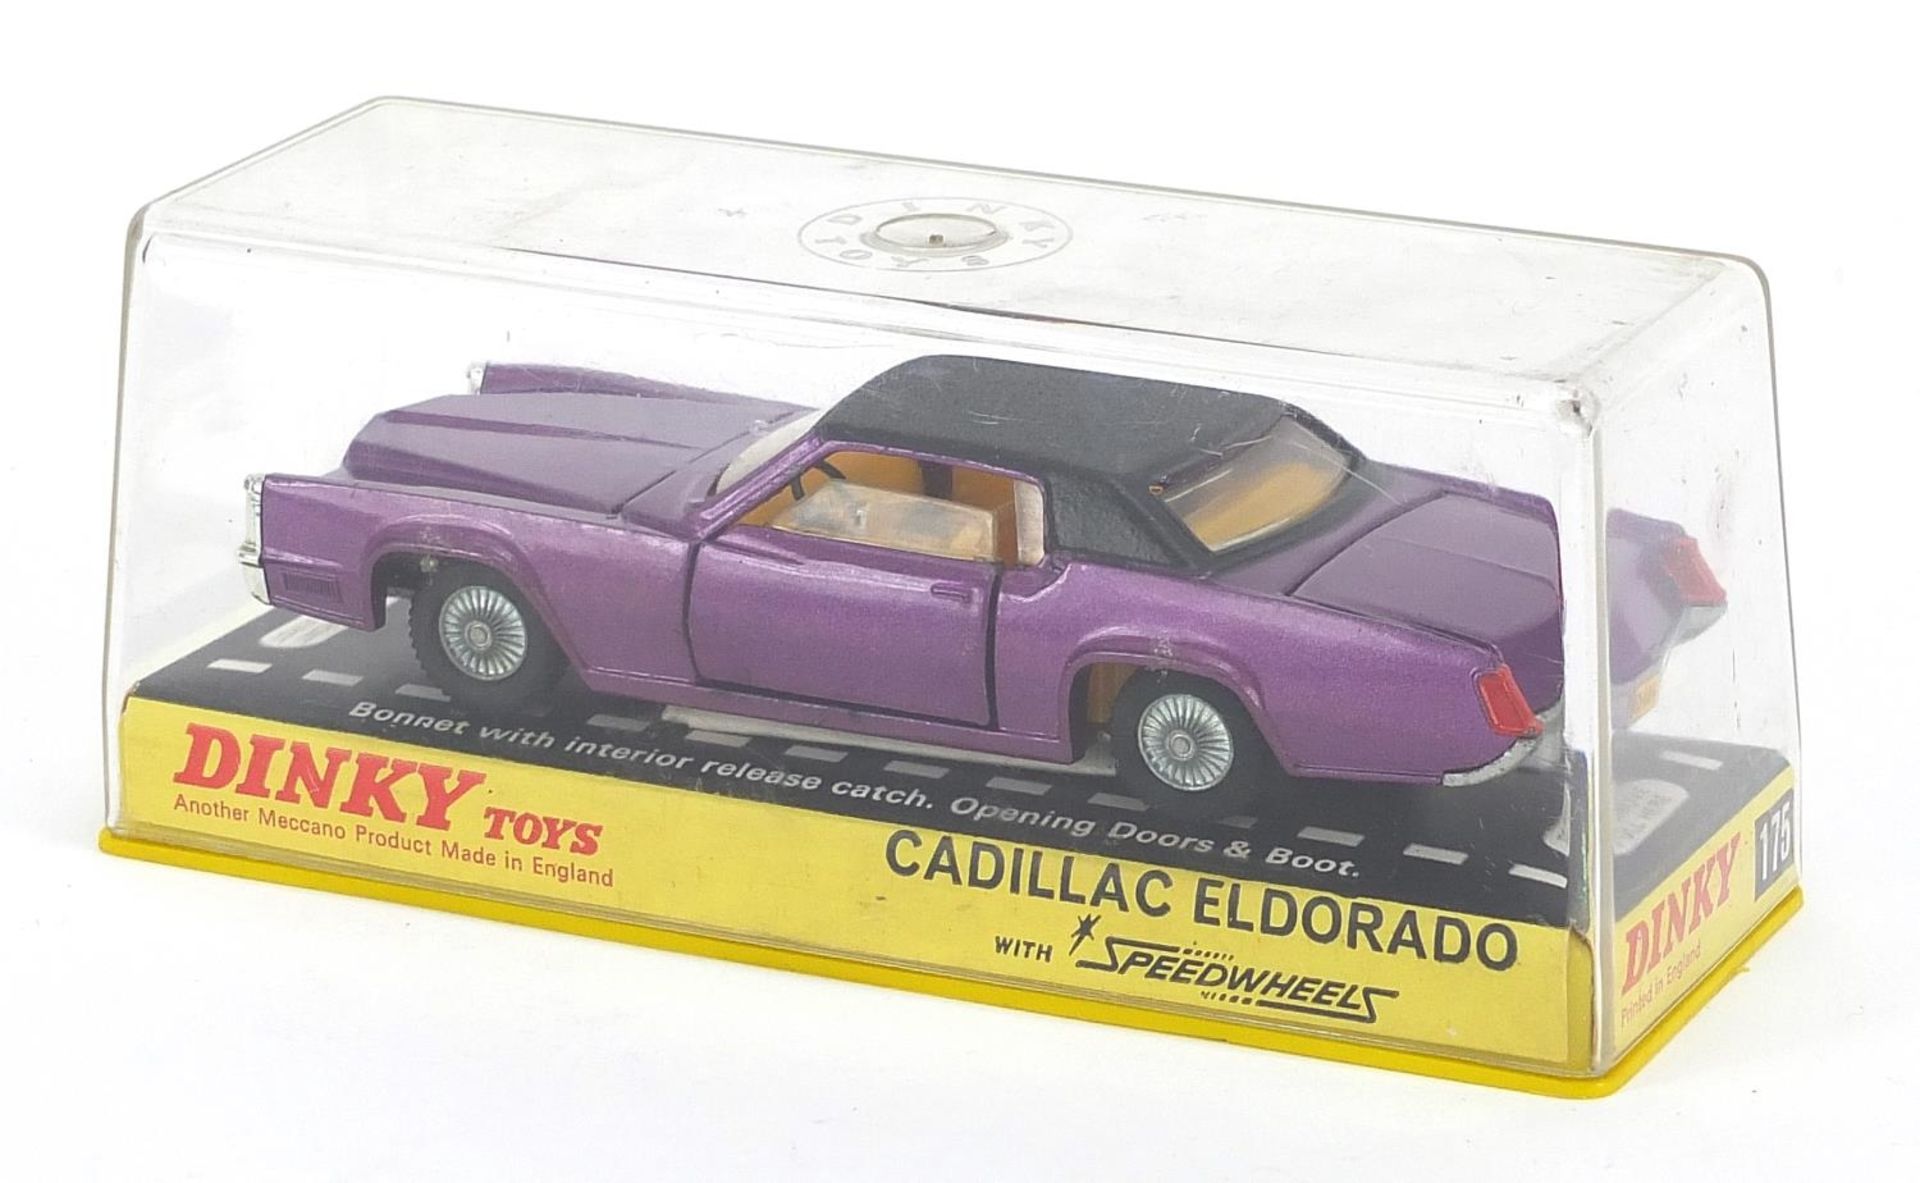 Dinky Toys diecast Cadillac Eldorado with case, number 175